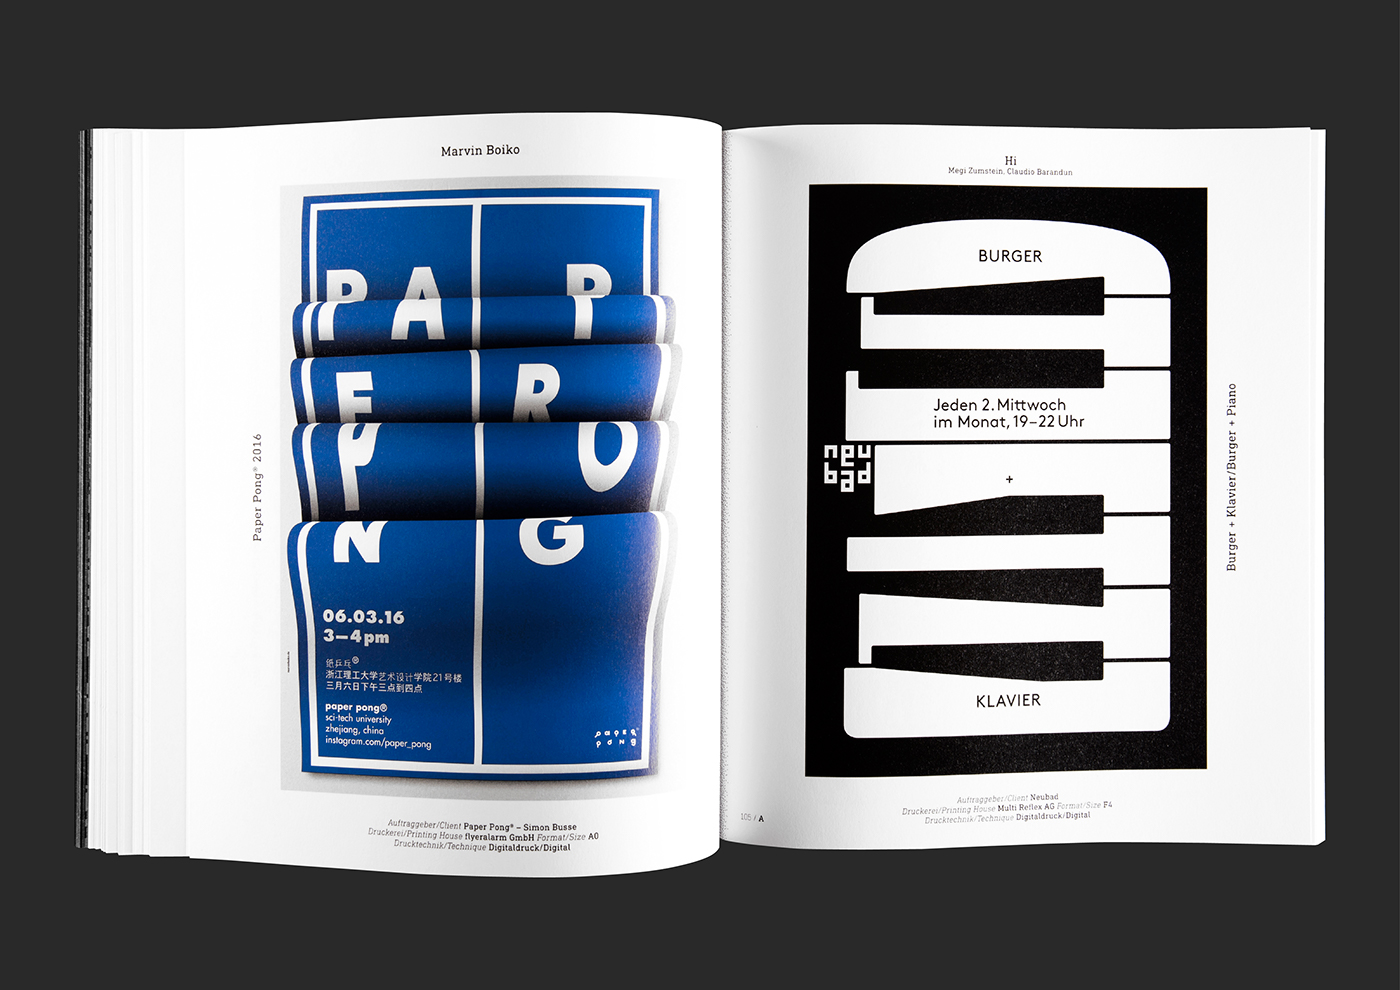 #bookdesign # graphicdesign #graphic #typegrafie #printed